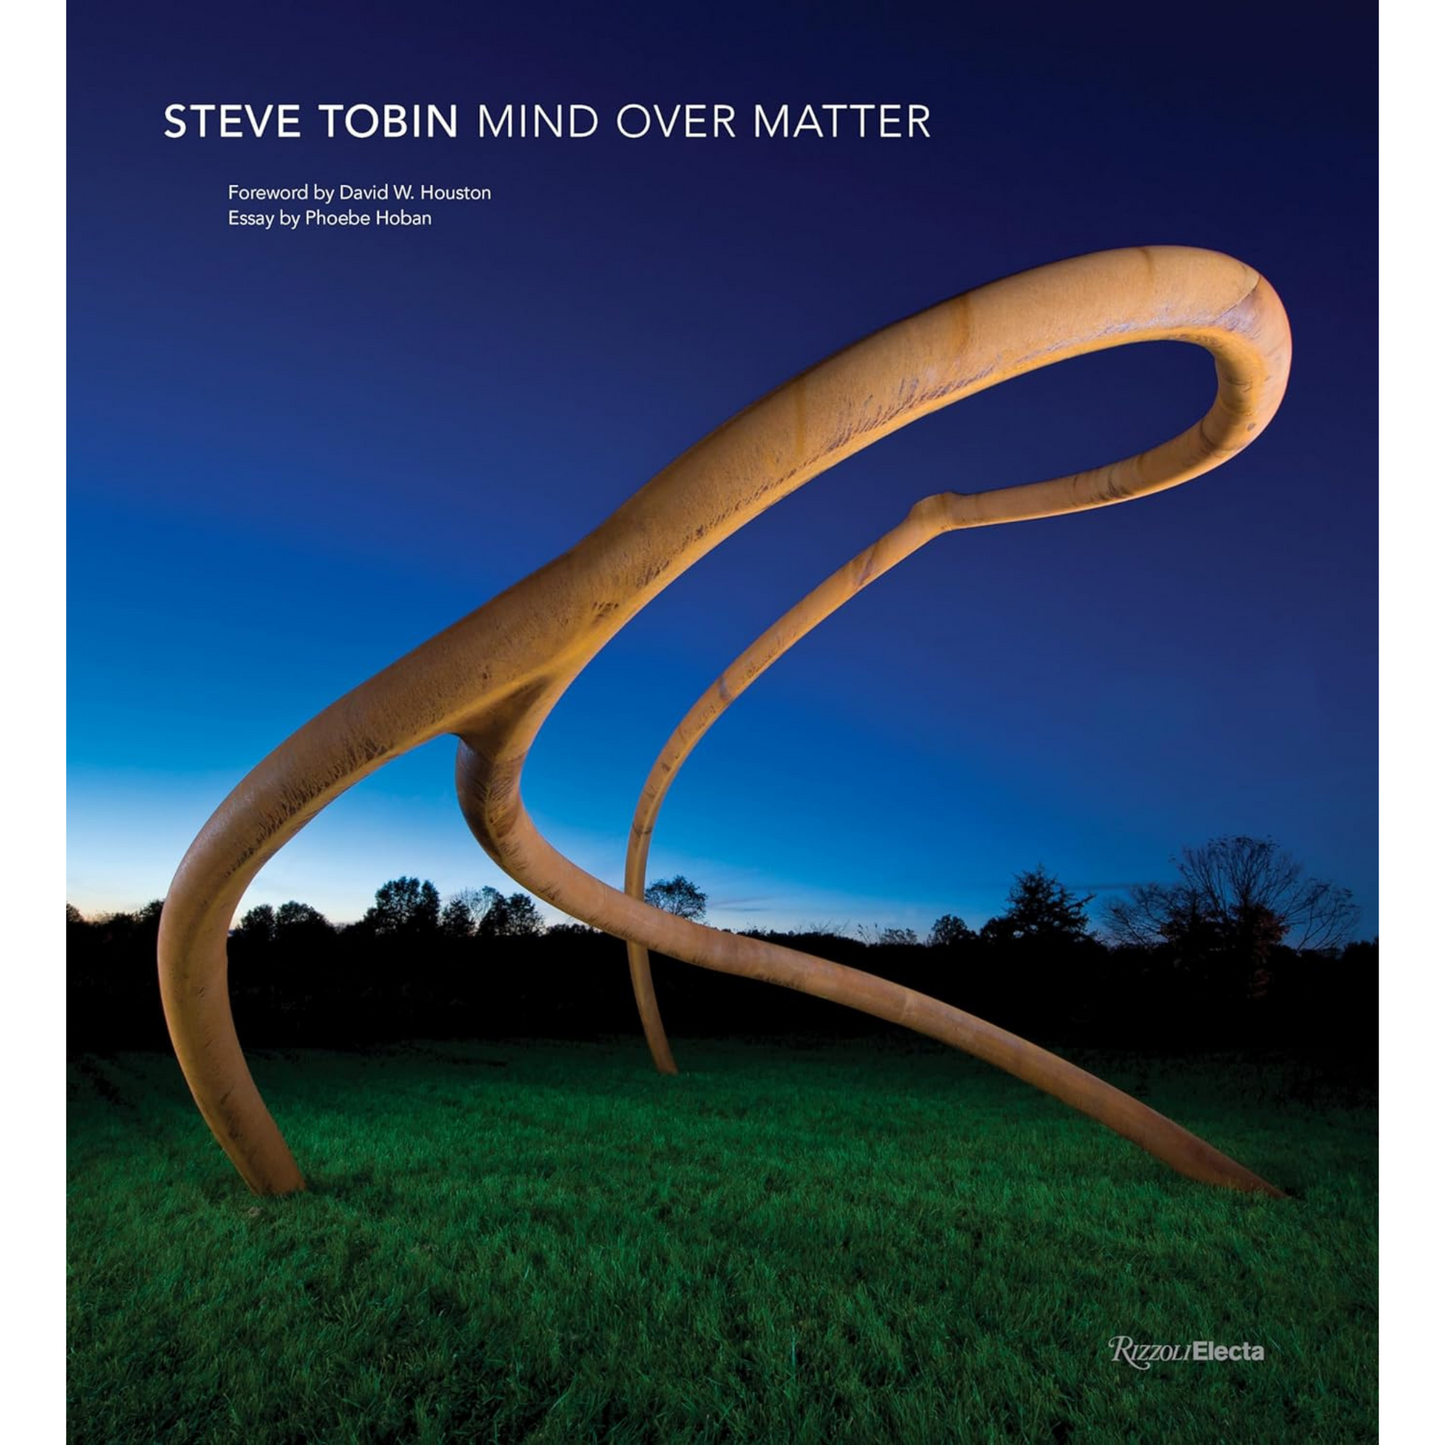 Cover of Steve Tobin book showing bendy wooden sculpture.